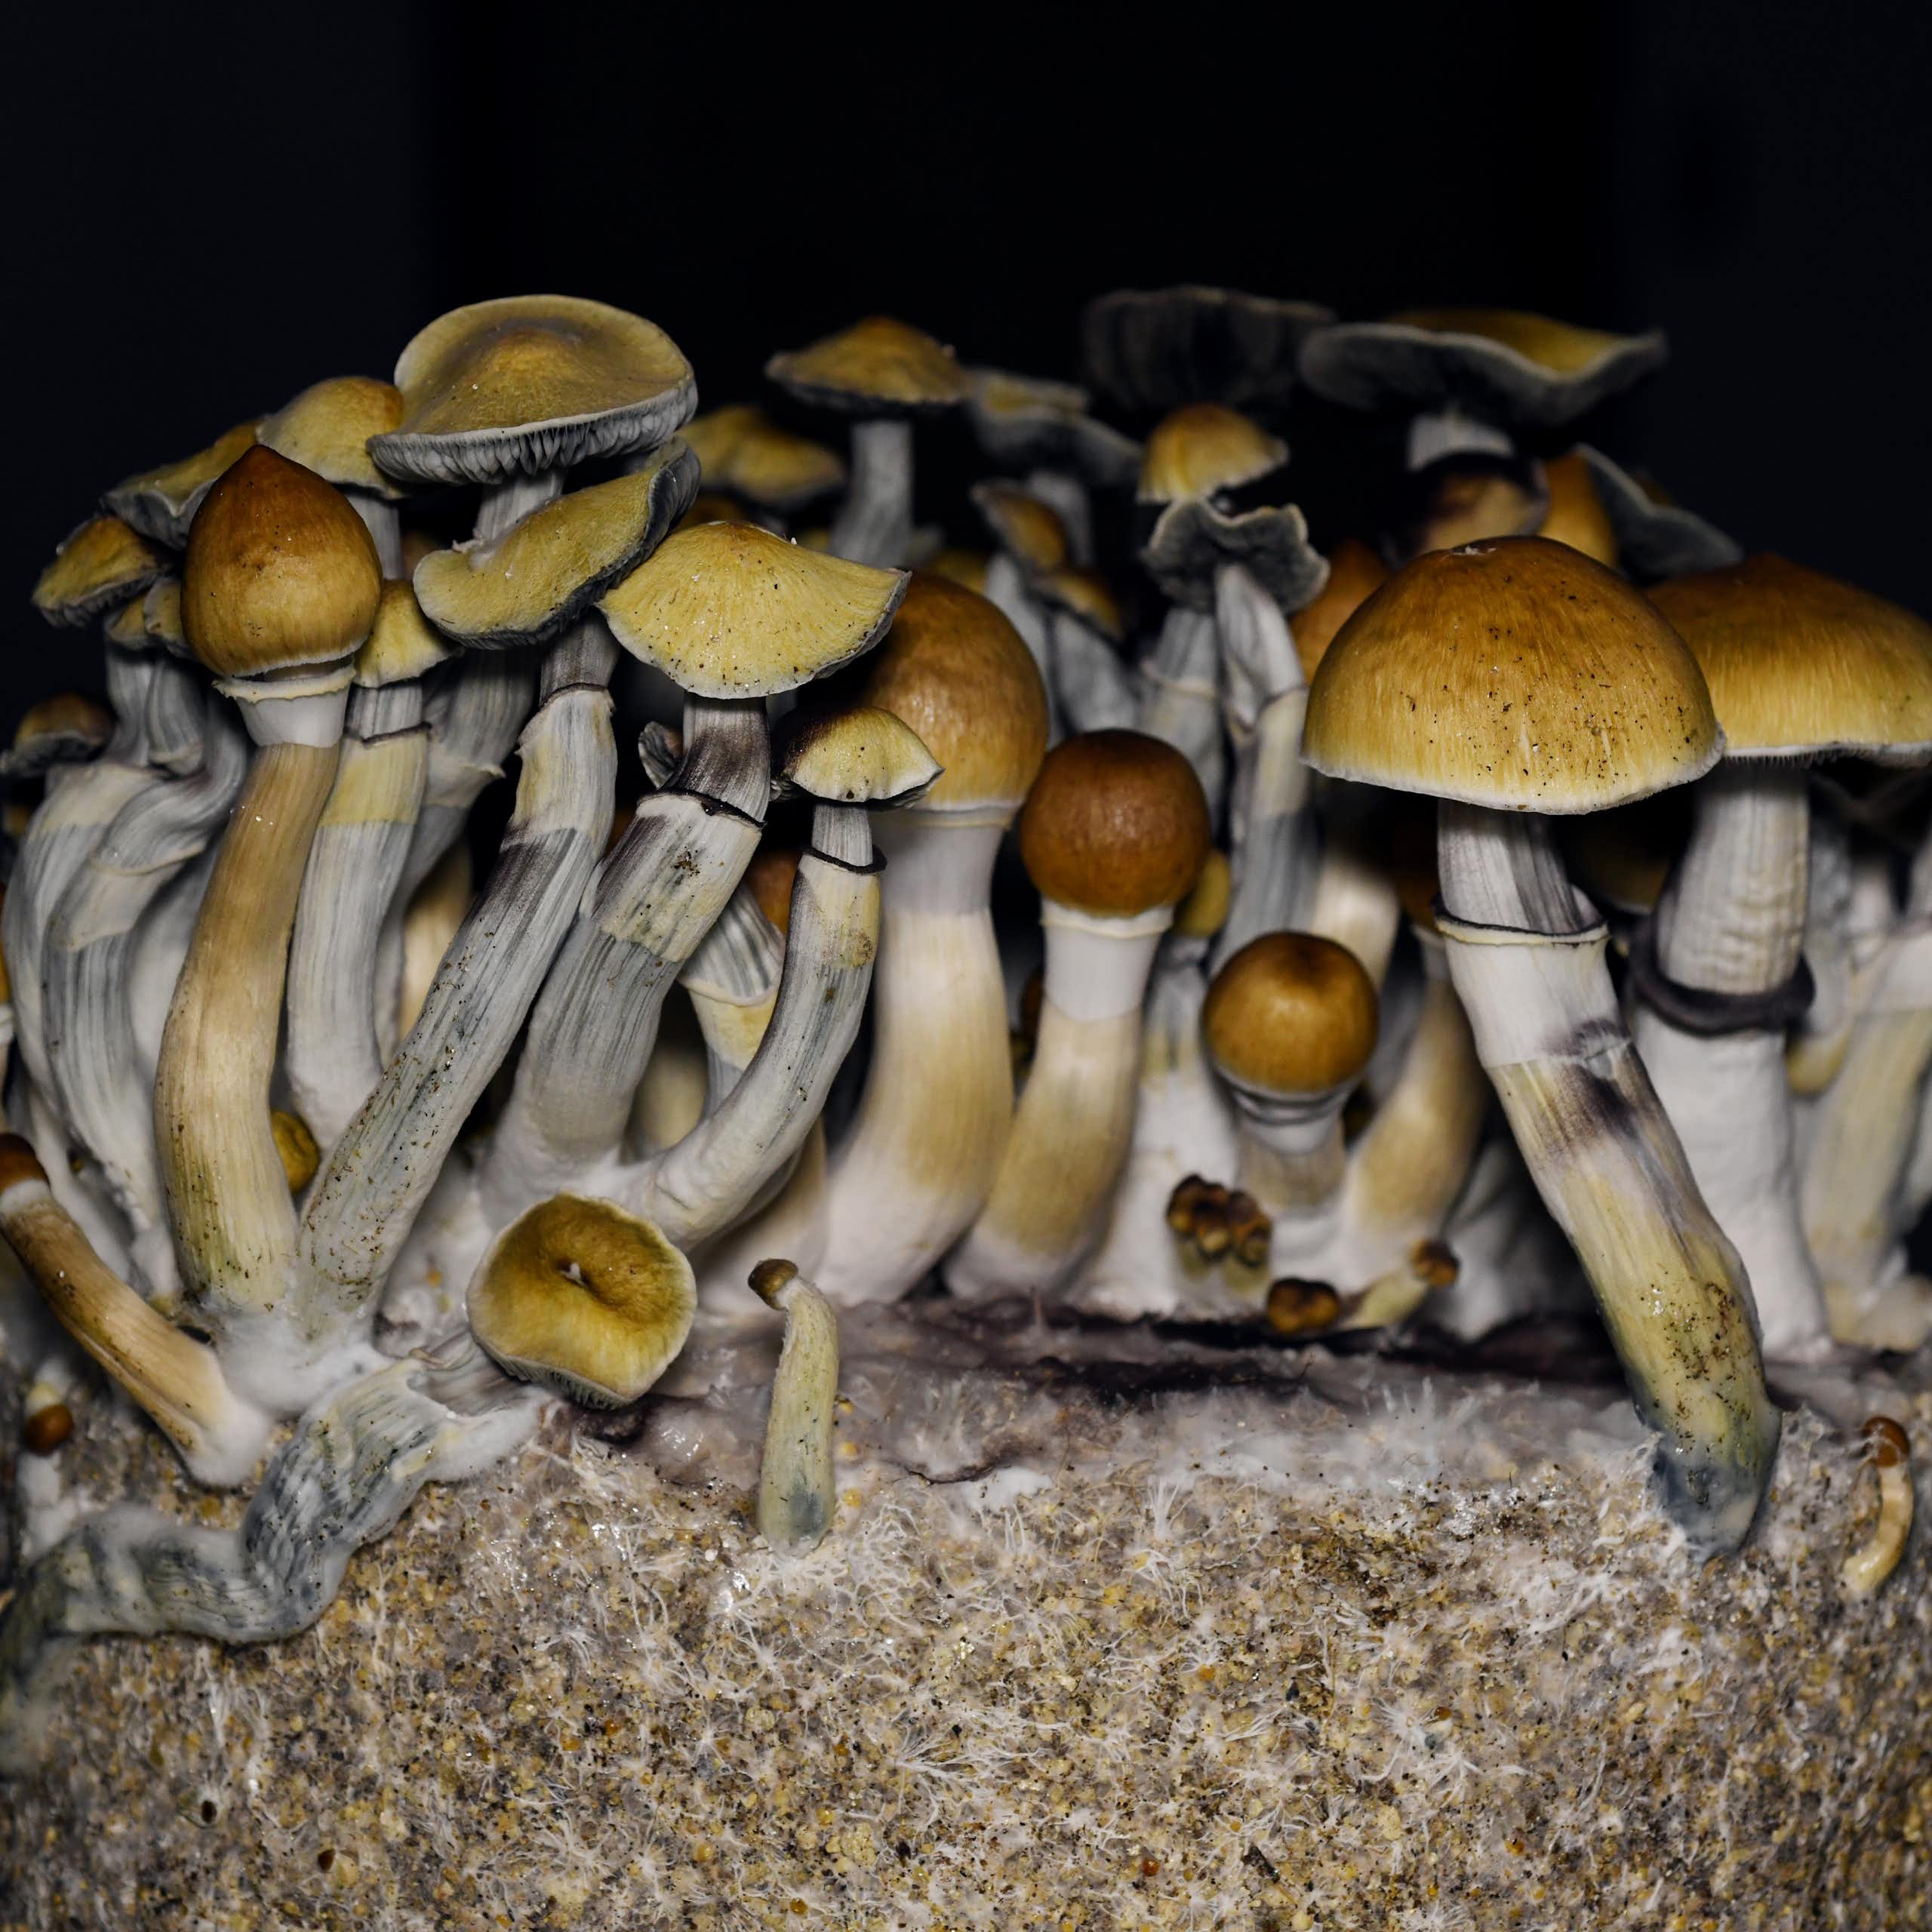 A batch of long, slender "magic mushrooms" set against a black background